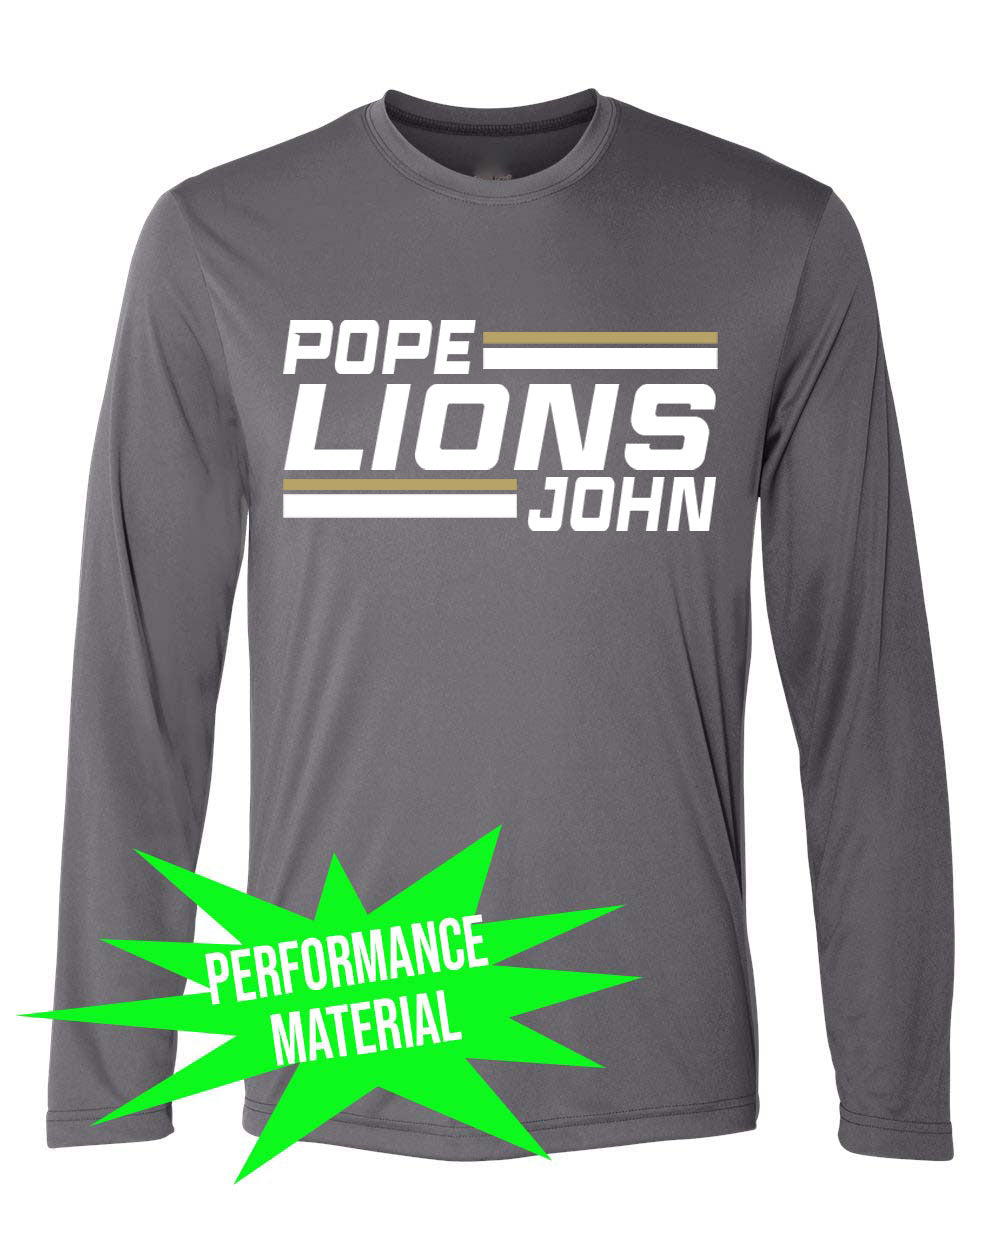 Pope John Cheer Performance Material Design 5 Long Sleeve Shirt